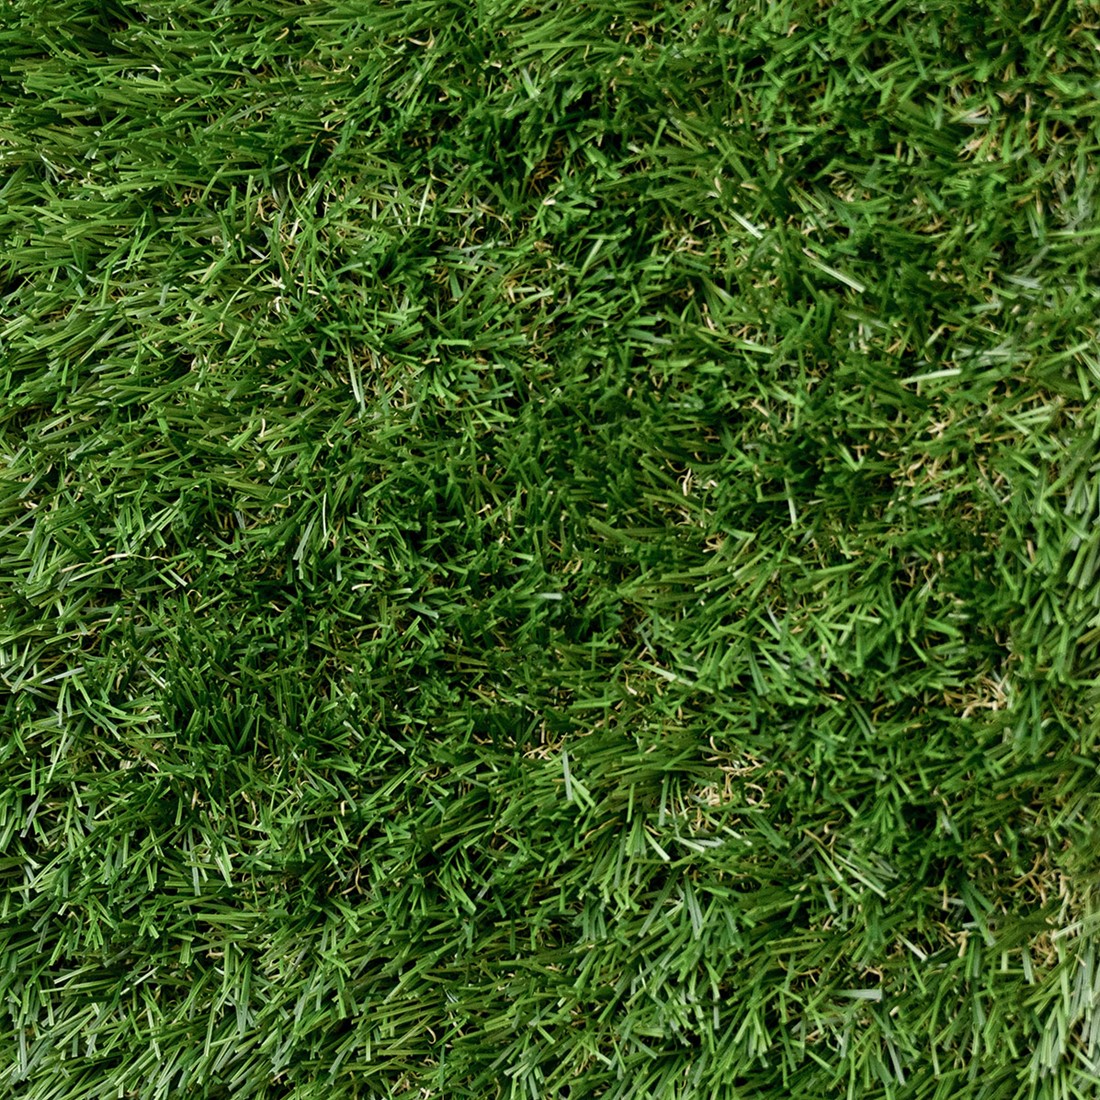 Lionel Green Street Hertellen Onregelmatigheden Kunstgras Grass Art Greenyard 4mtr. breed poolhoogte 40mm Steenplaza Lexmond